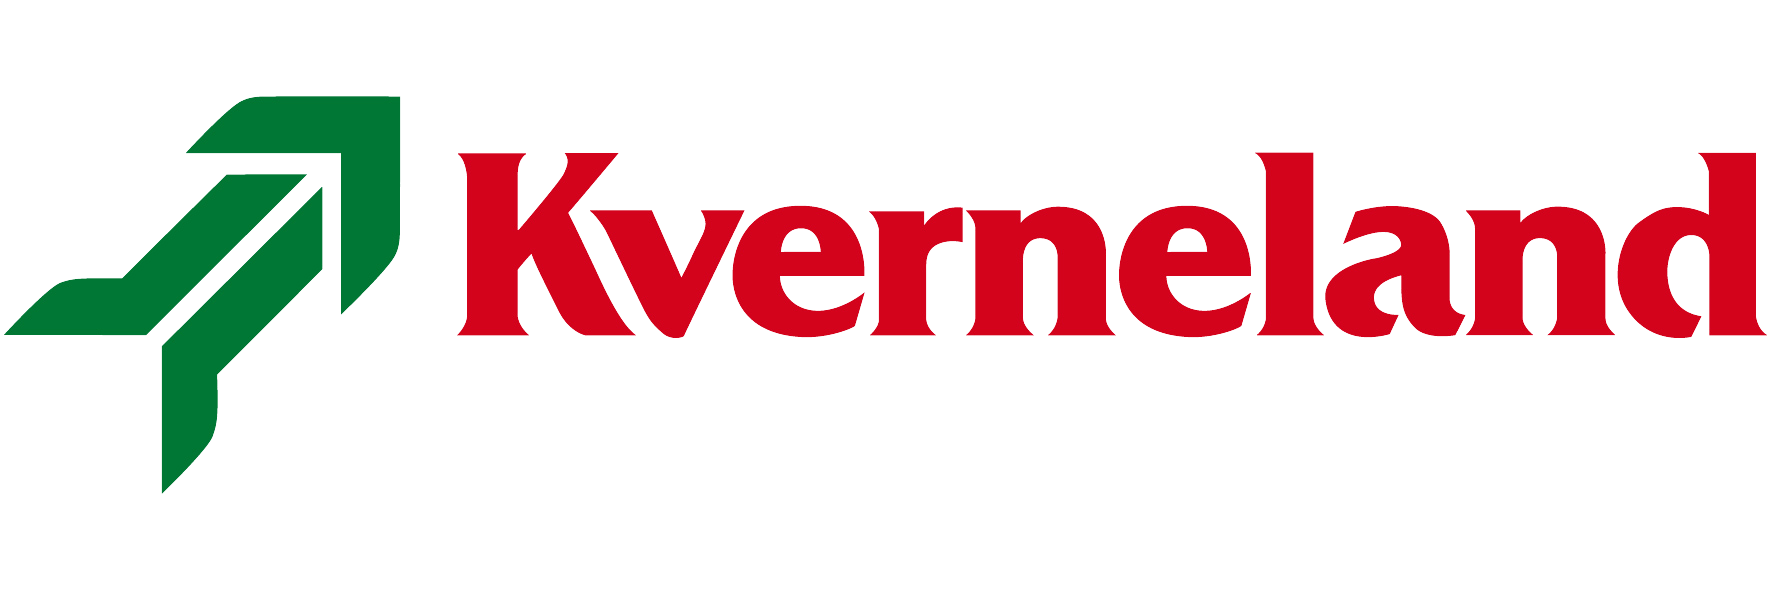 Kverneland_logo_transparent-bg